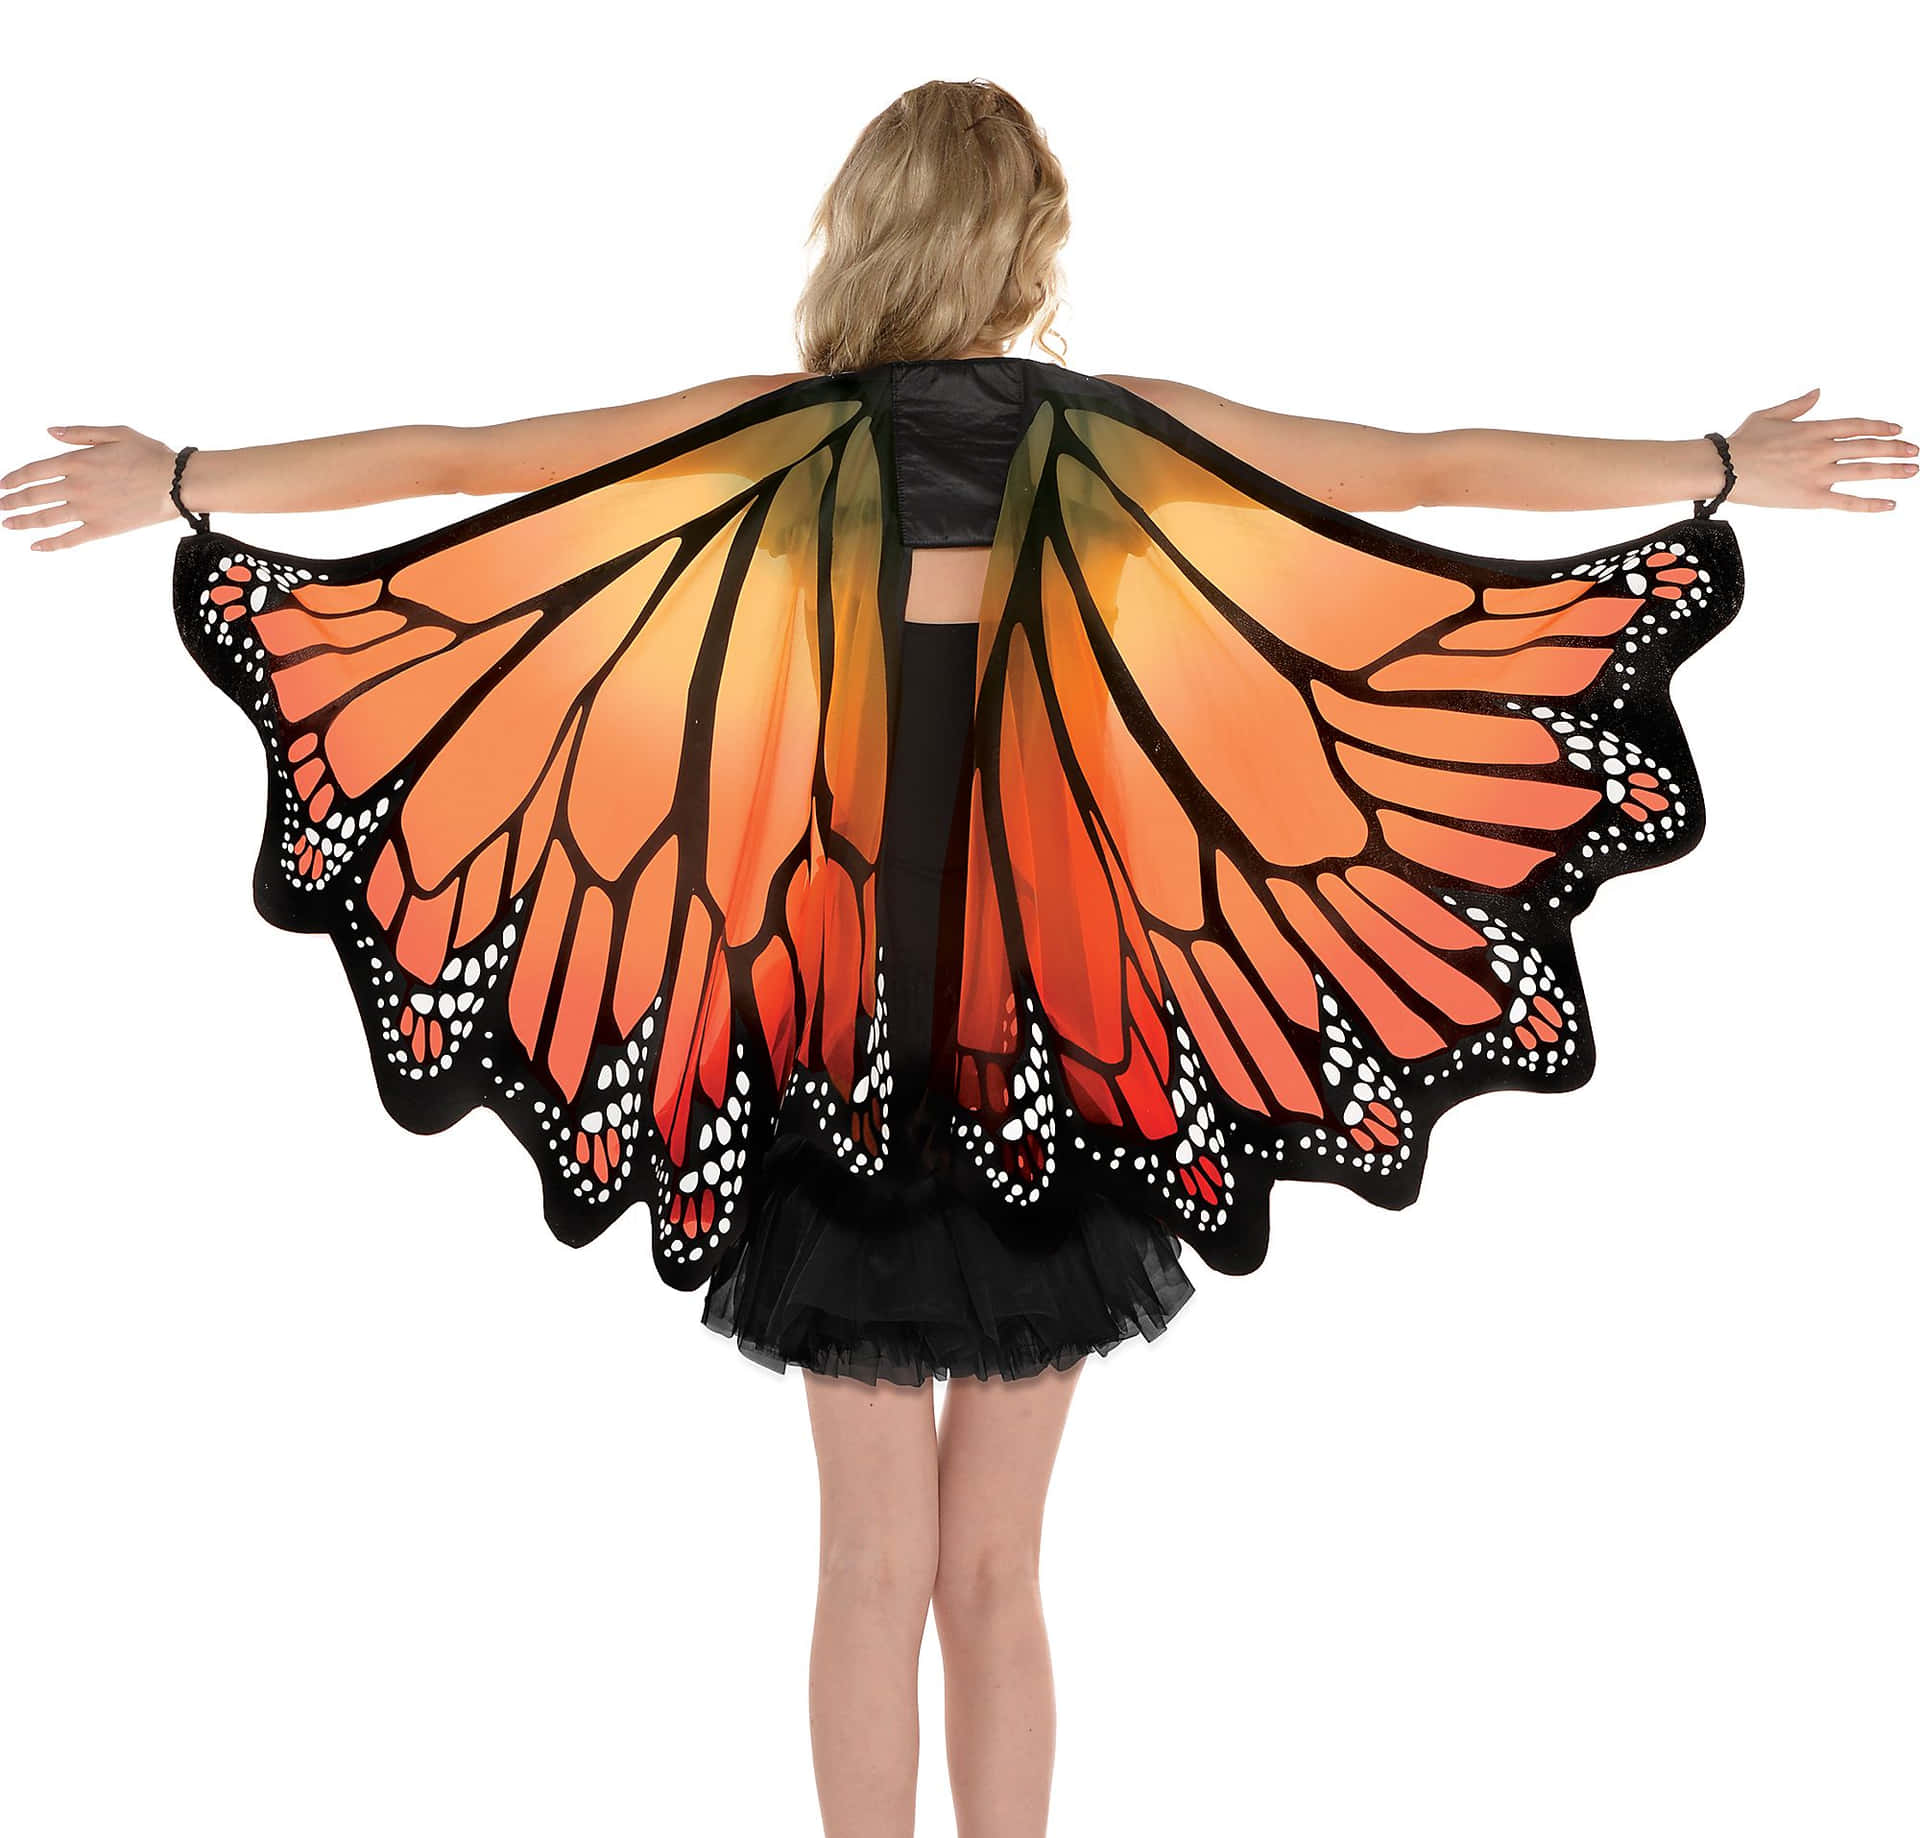 Flutter in style wearing this delightful butterfly wing dress Wallpaper